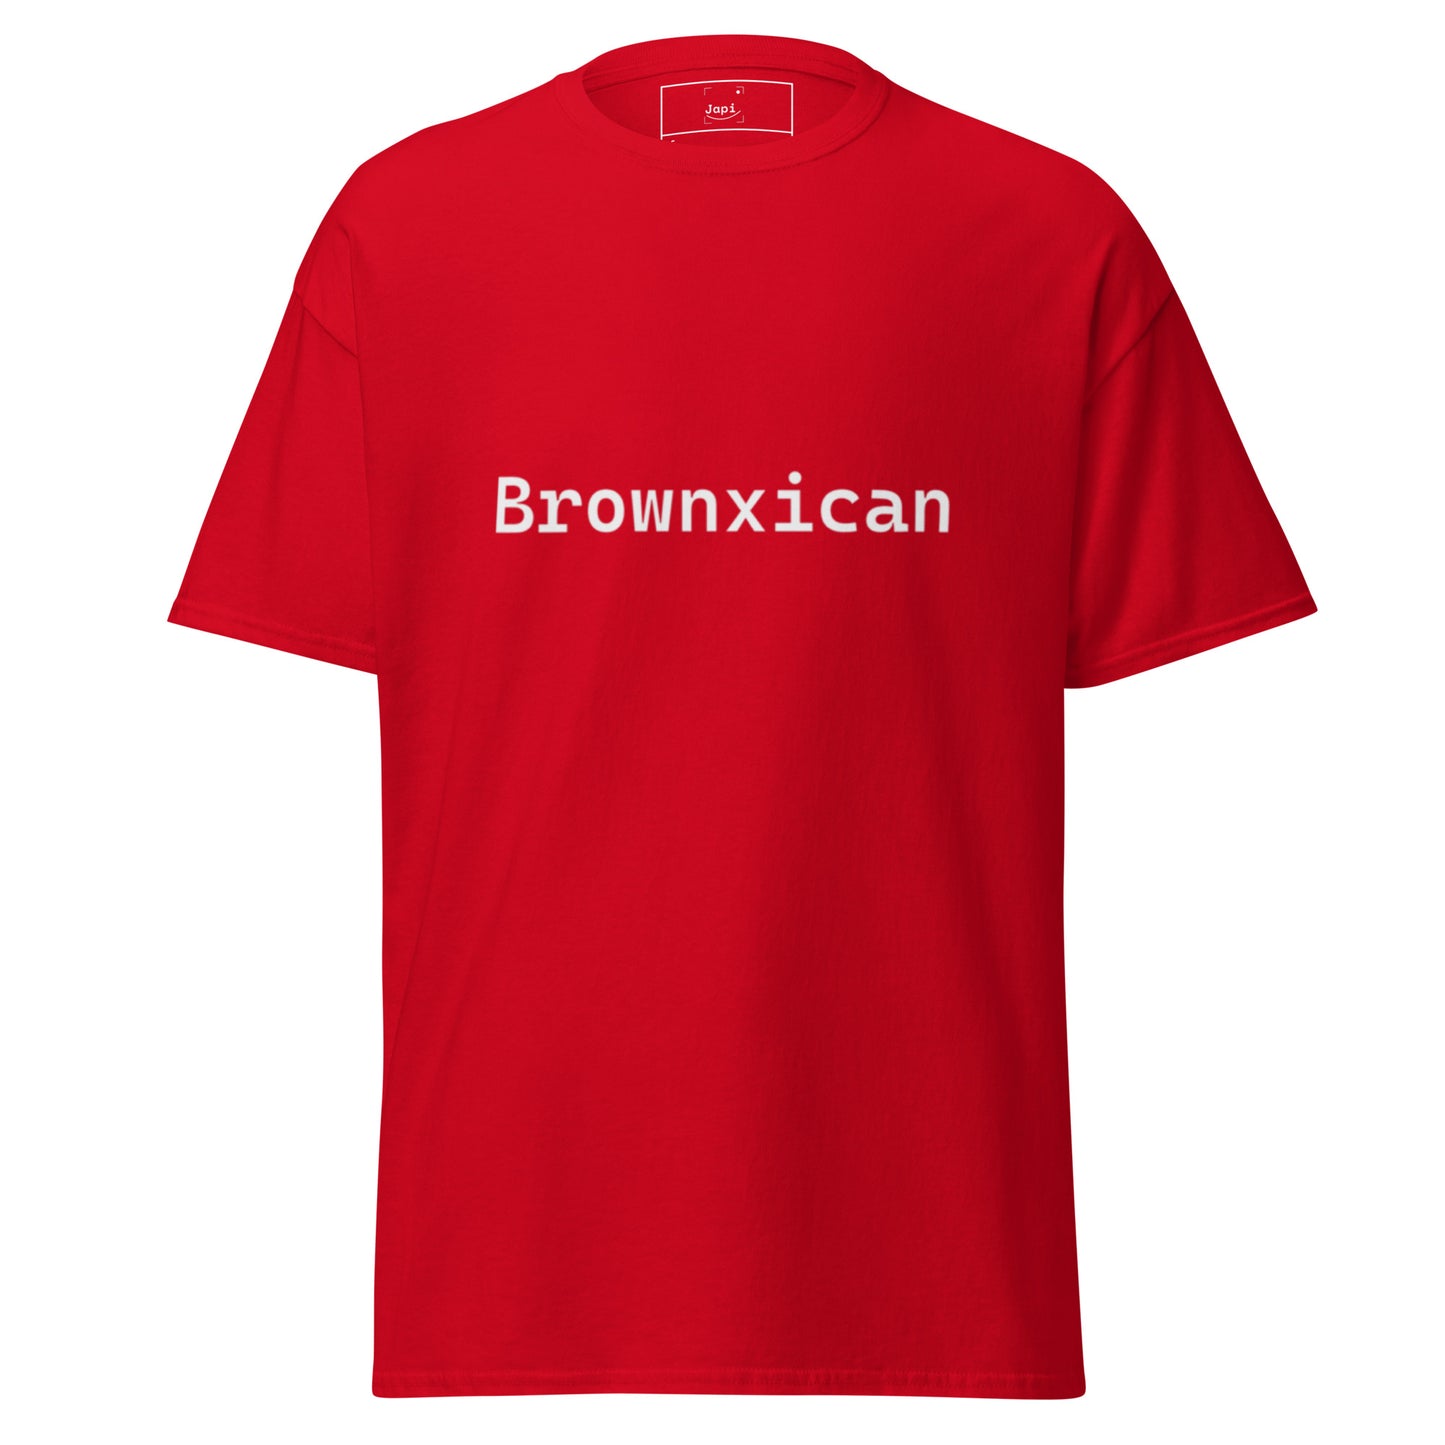 Brownxican T-shirt